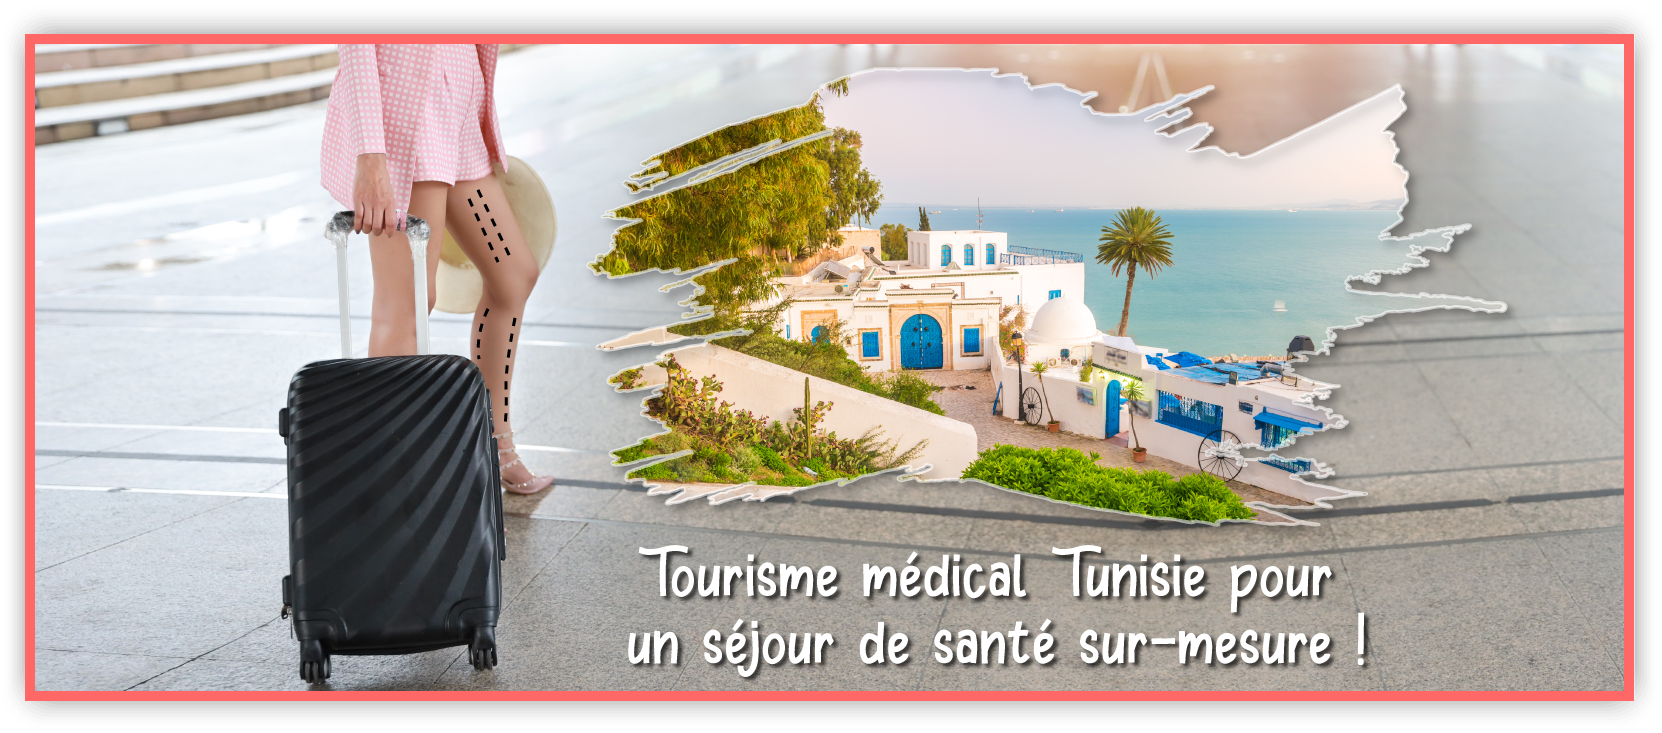 tourisme medical tunisie slide 3